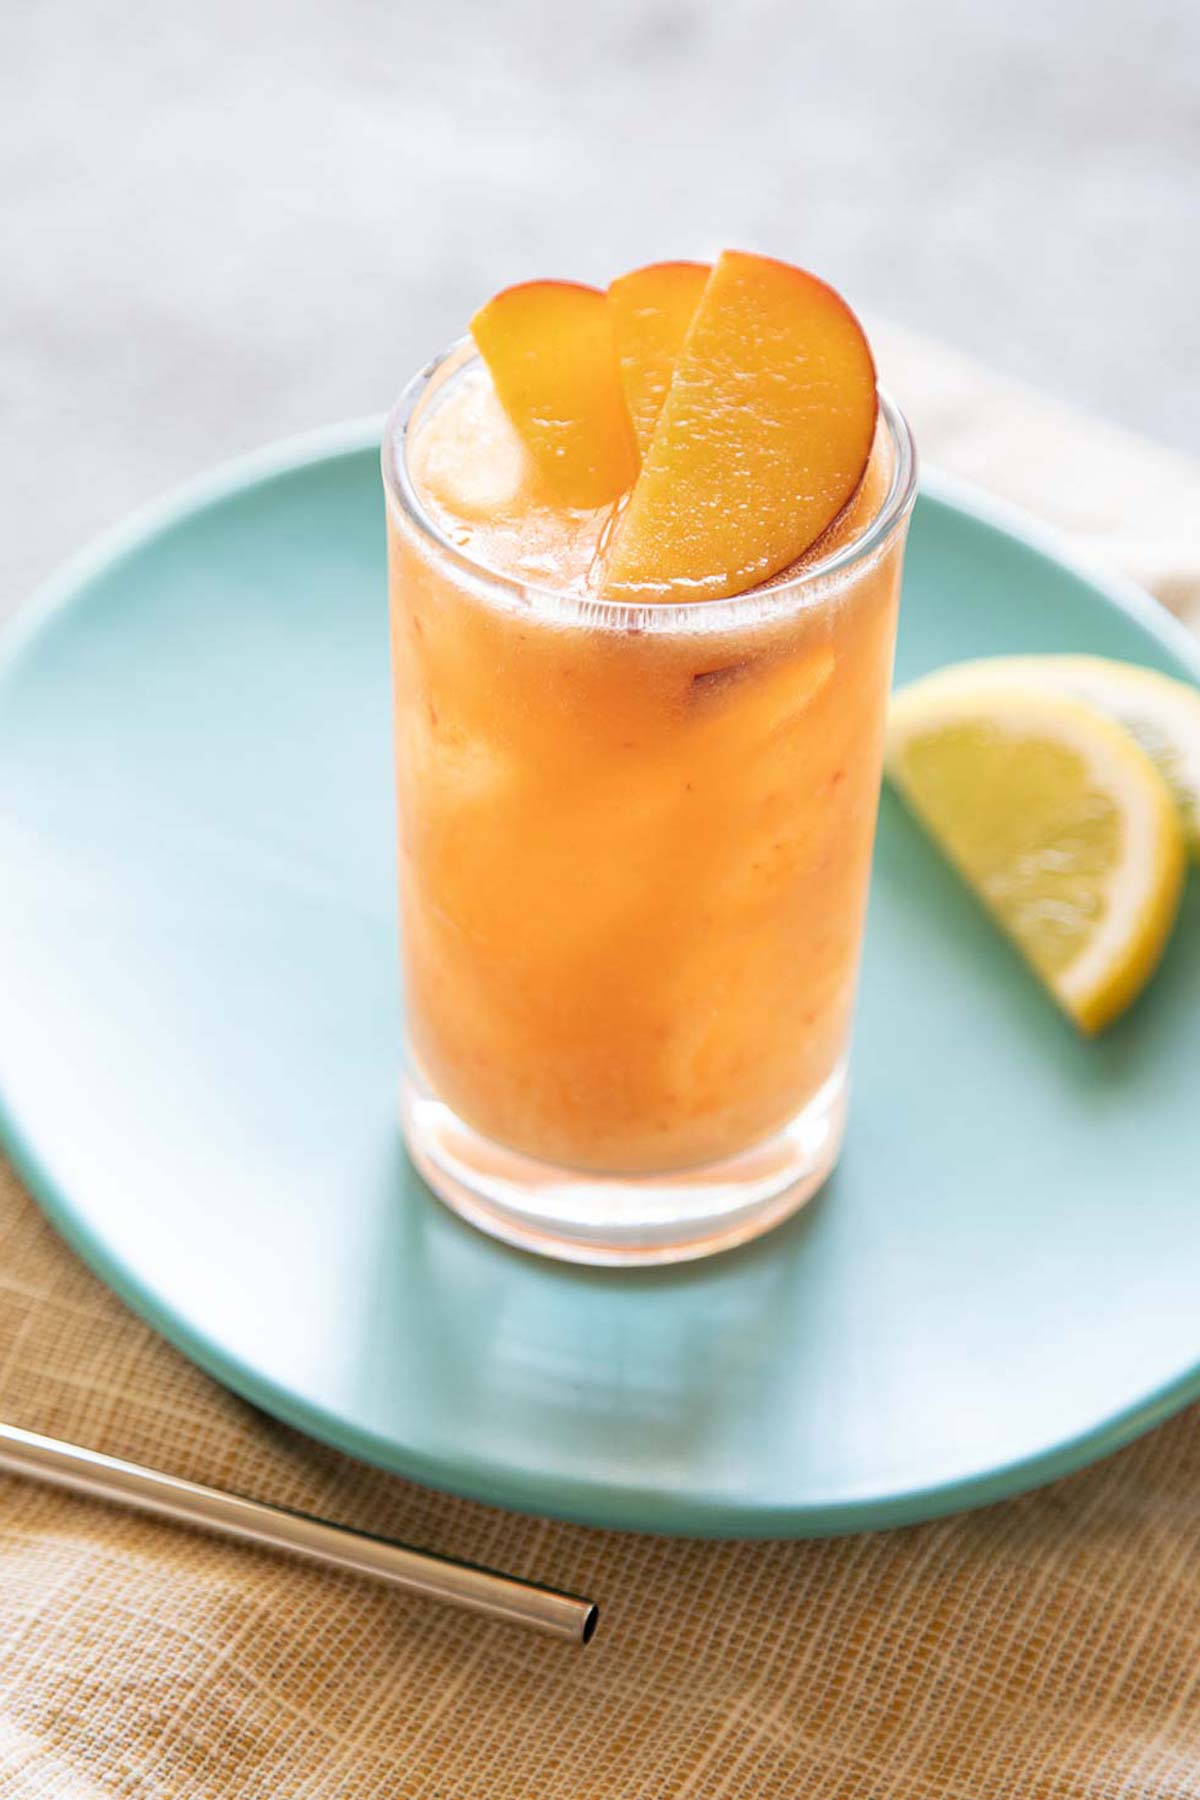 Peach lemonade in a glass.